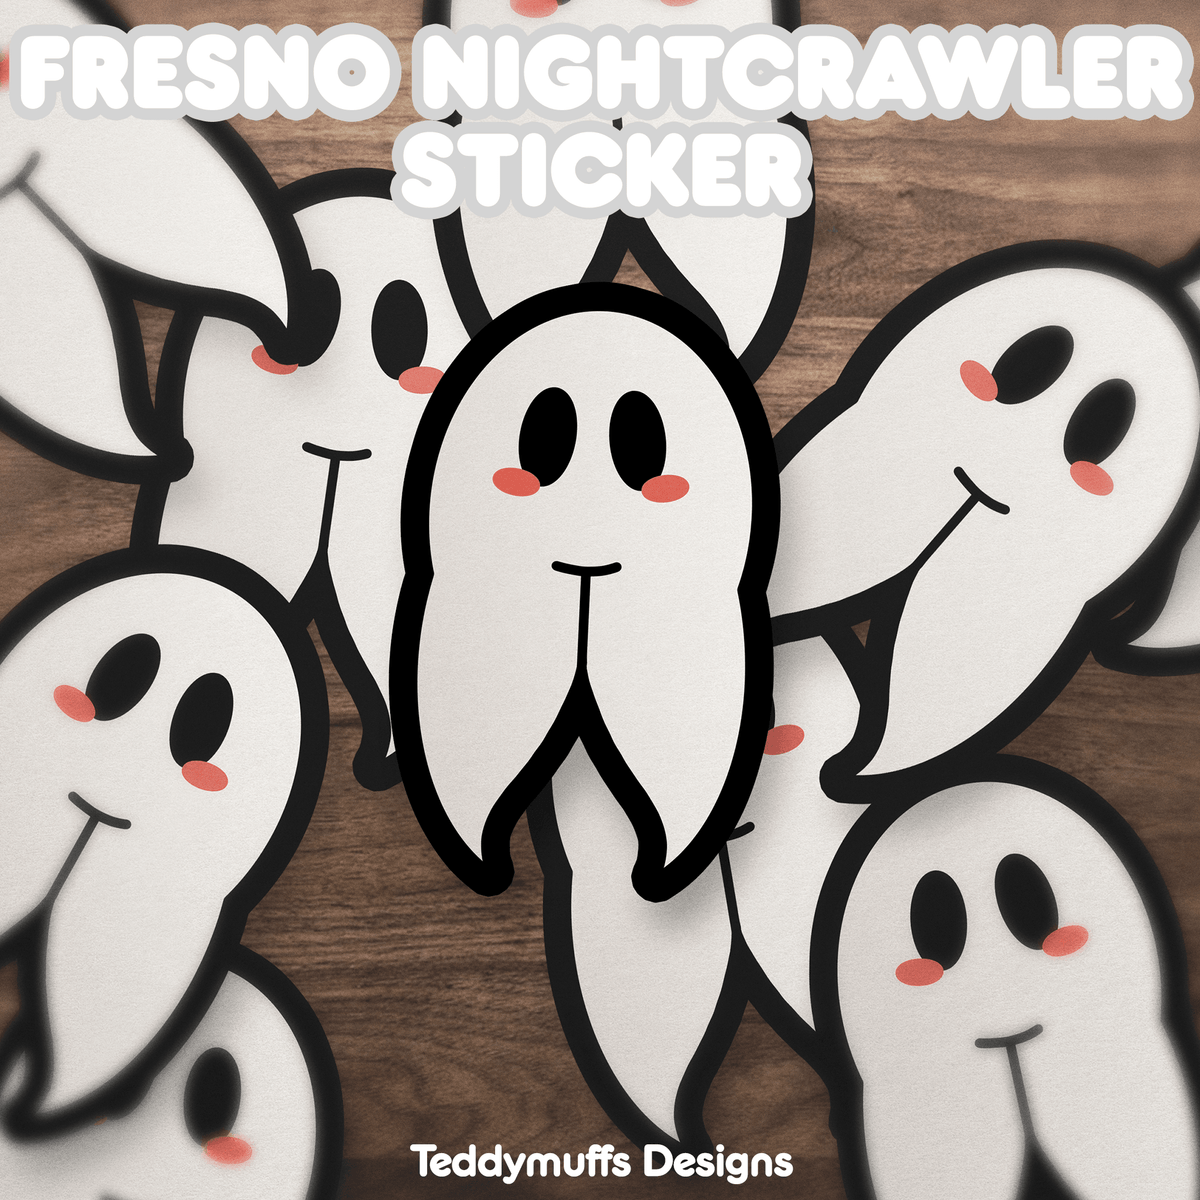 Fresno Night Crawler (Cryptid) Sticker